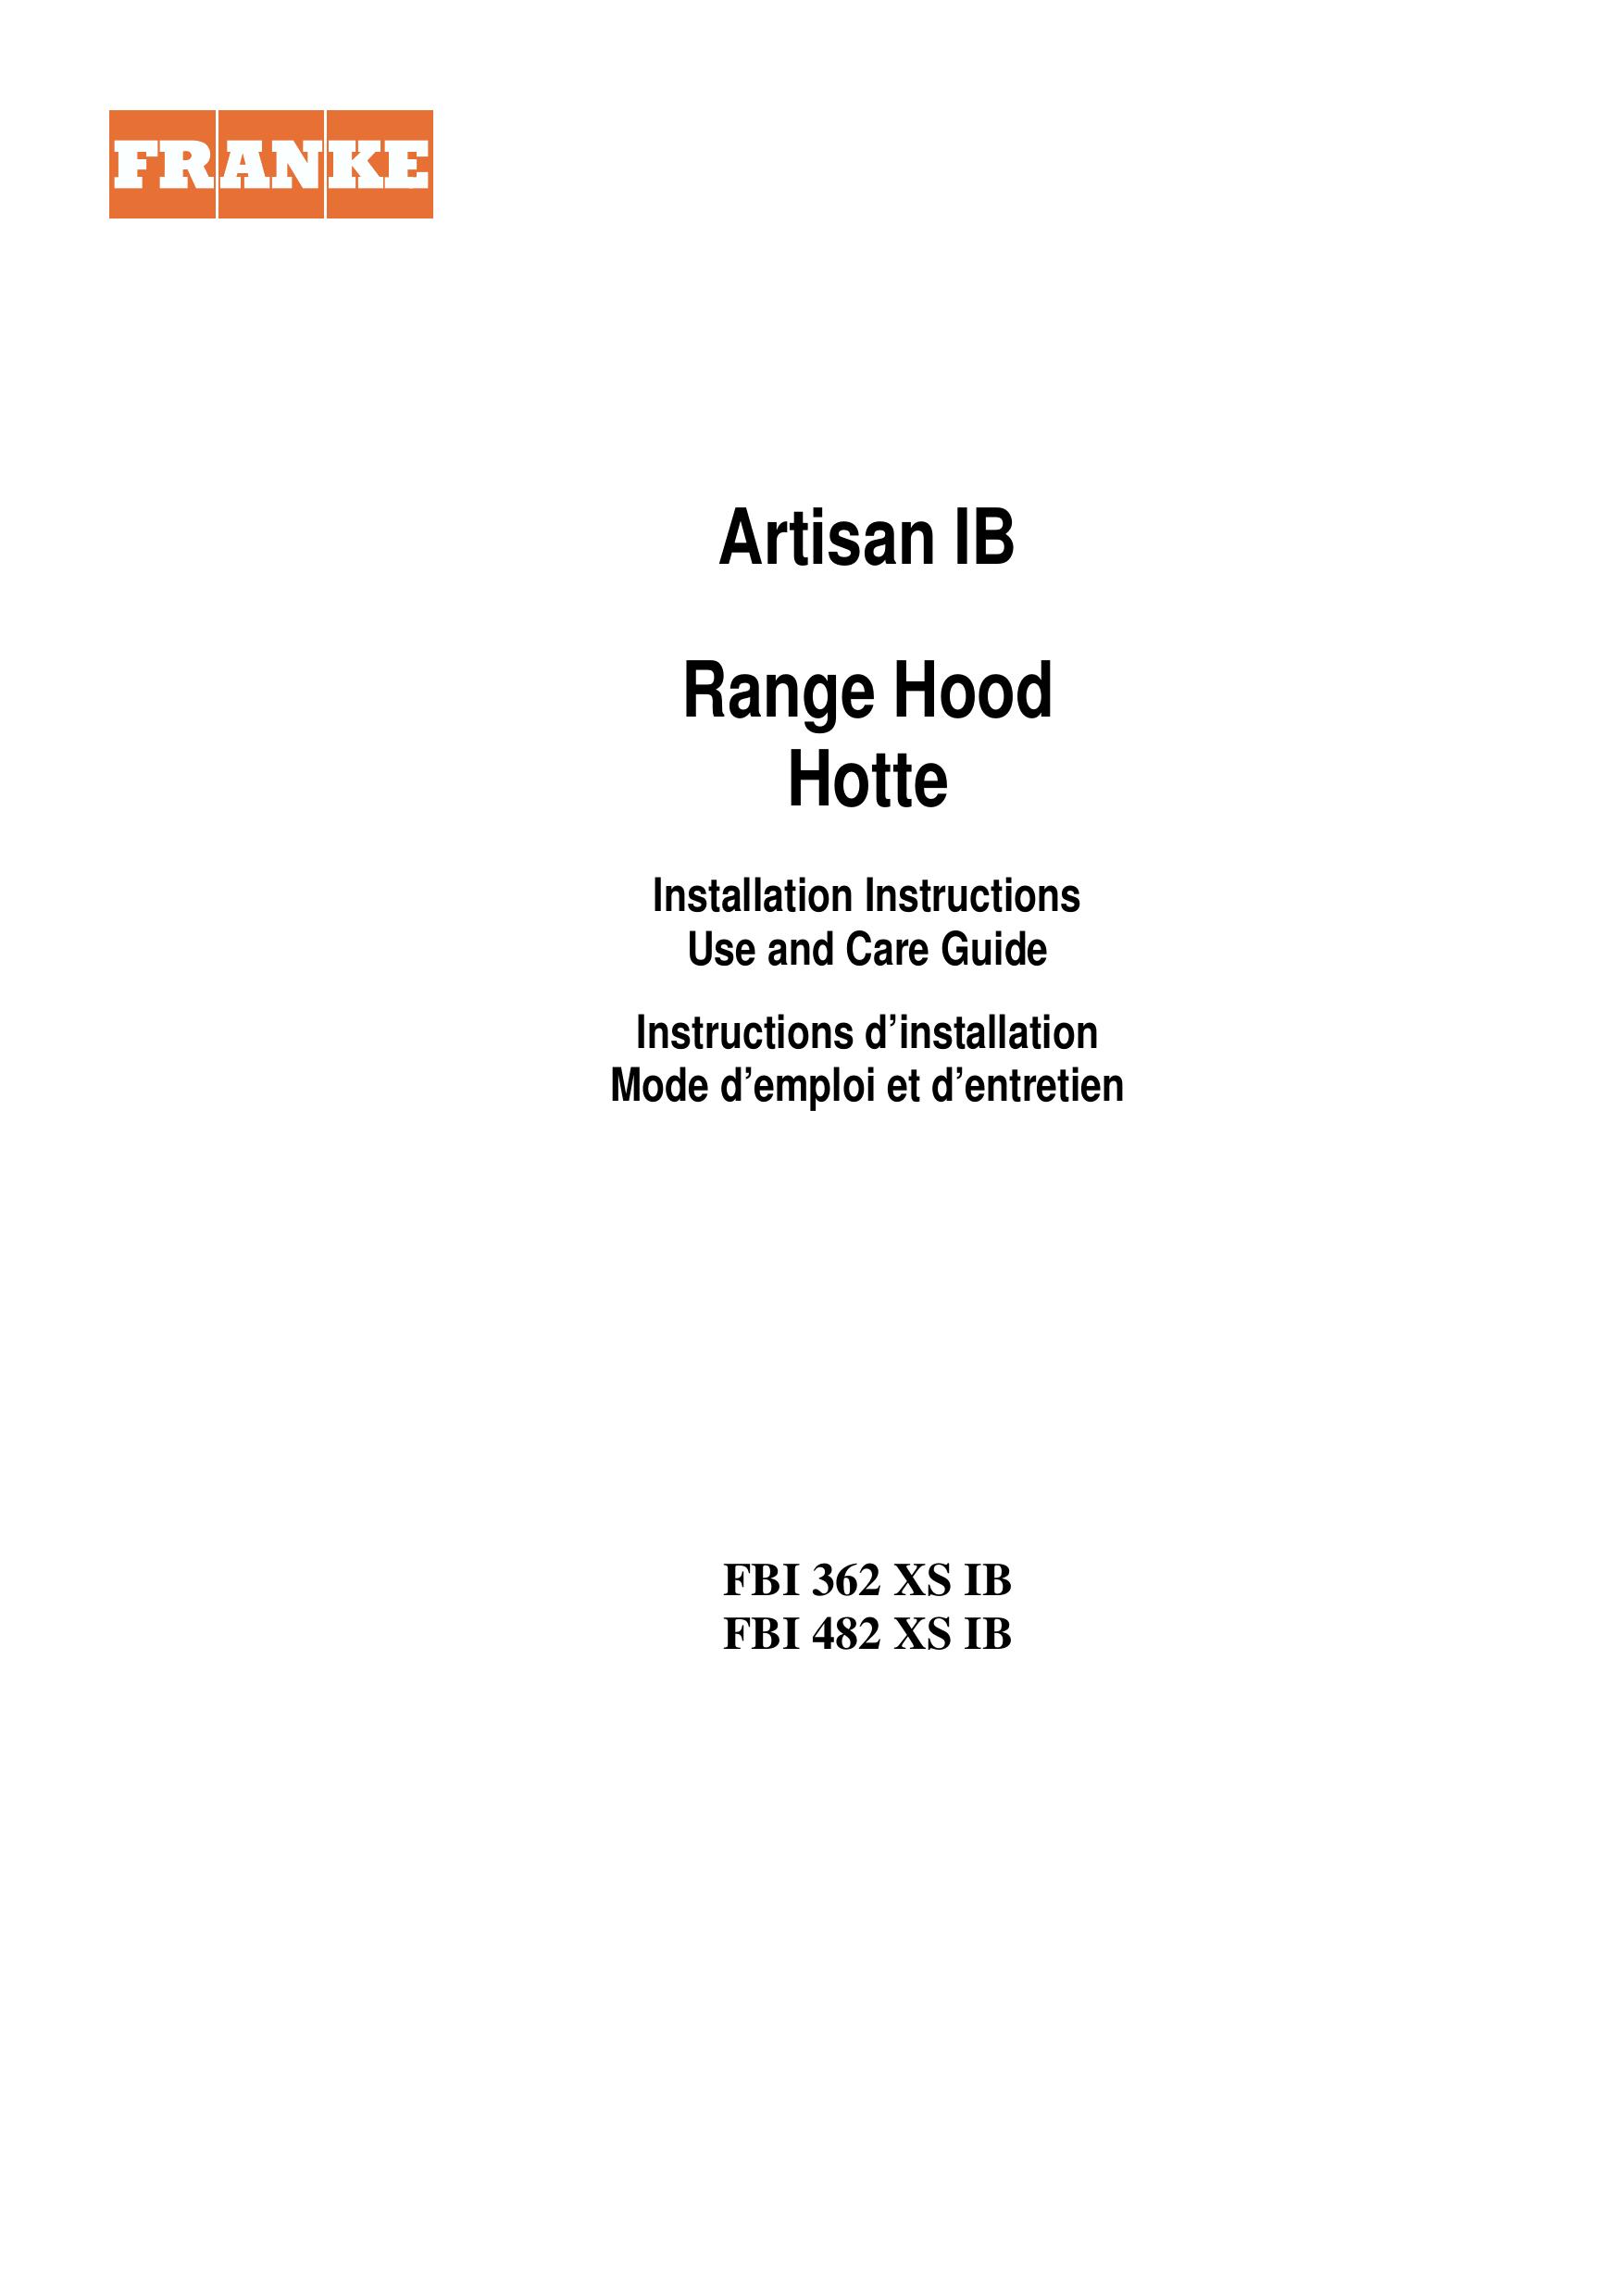 Franke Consumer Products FBI 362 XS IB Ventilation Hood User Manual